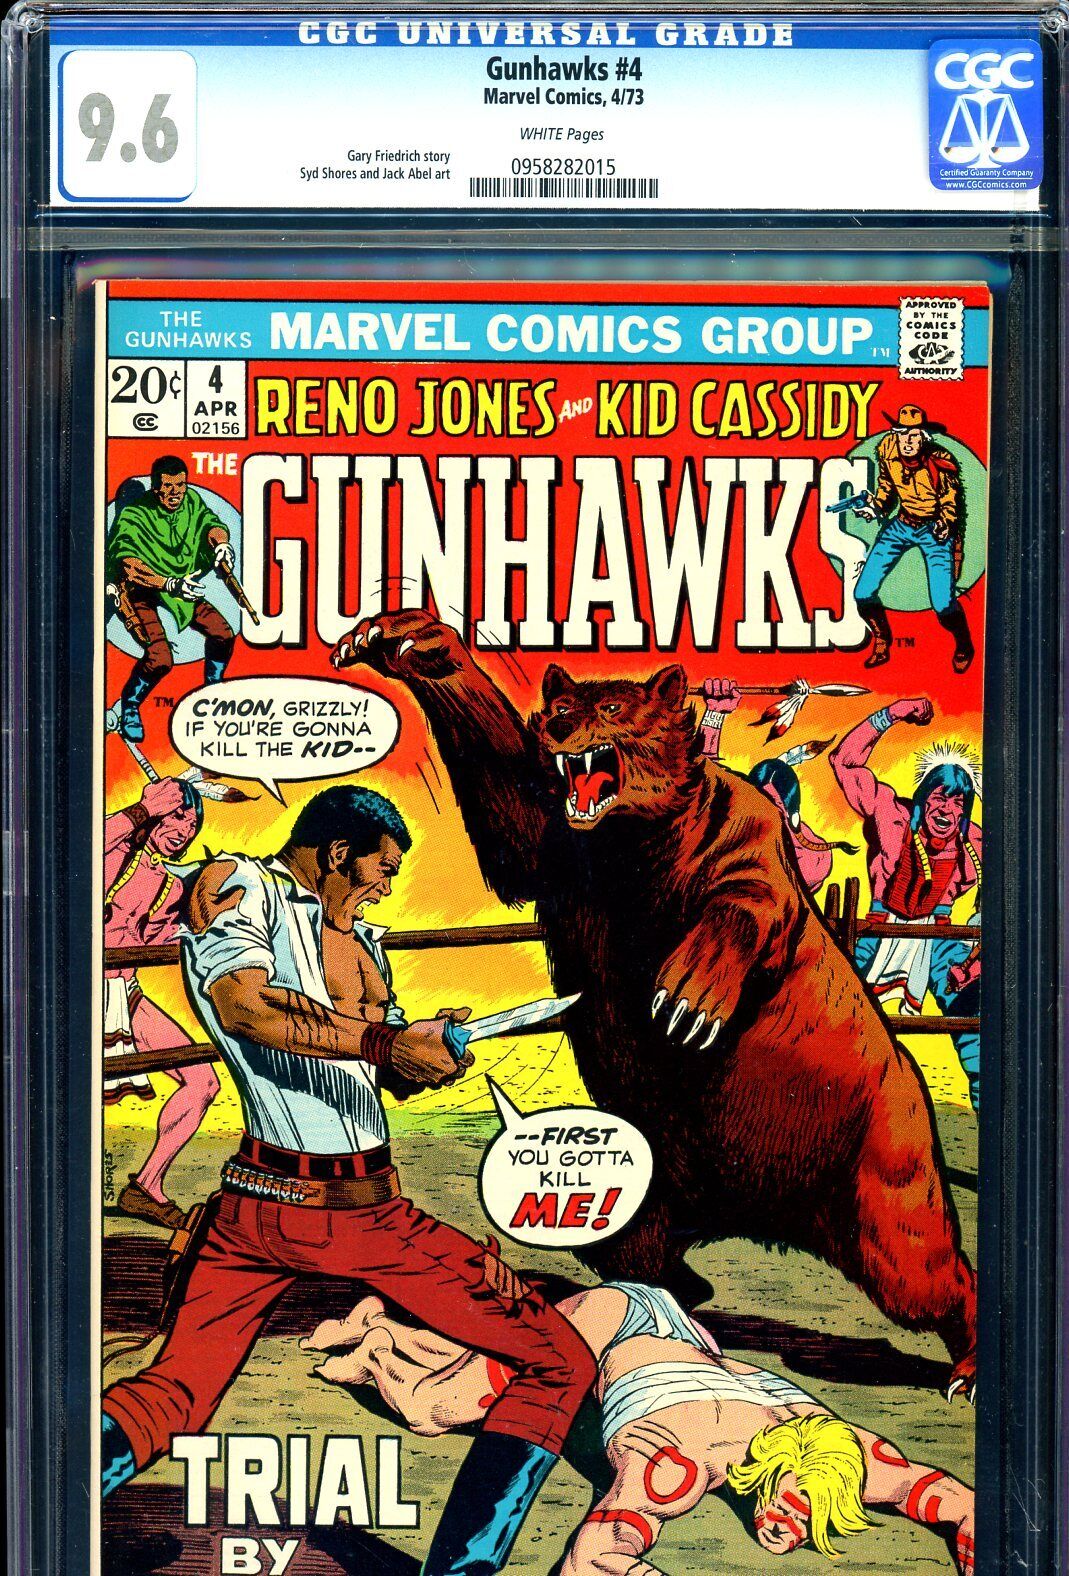 Gunhawks #4 CGC GRADED 9.6 - white pages - 2nd highest graded - Shores/Abel art